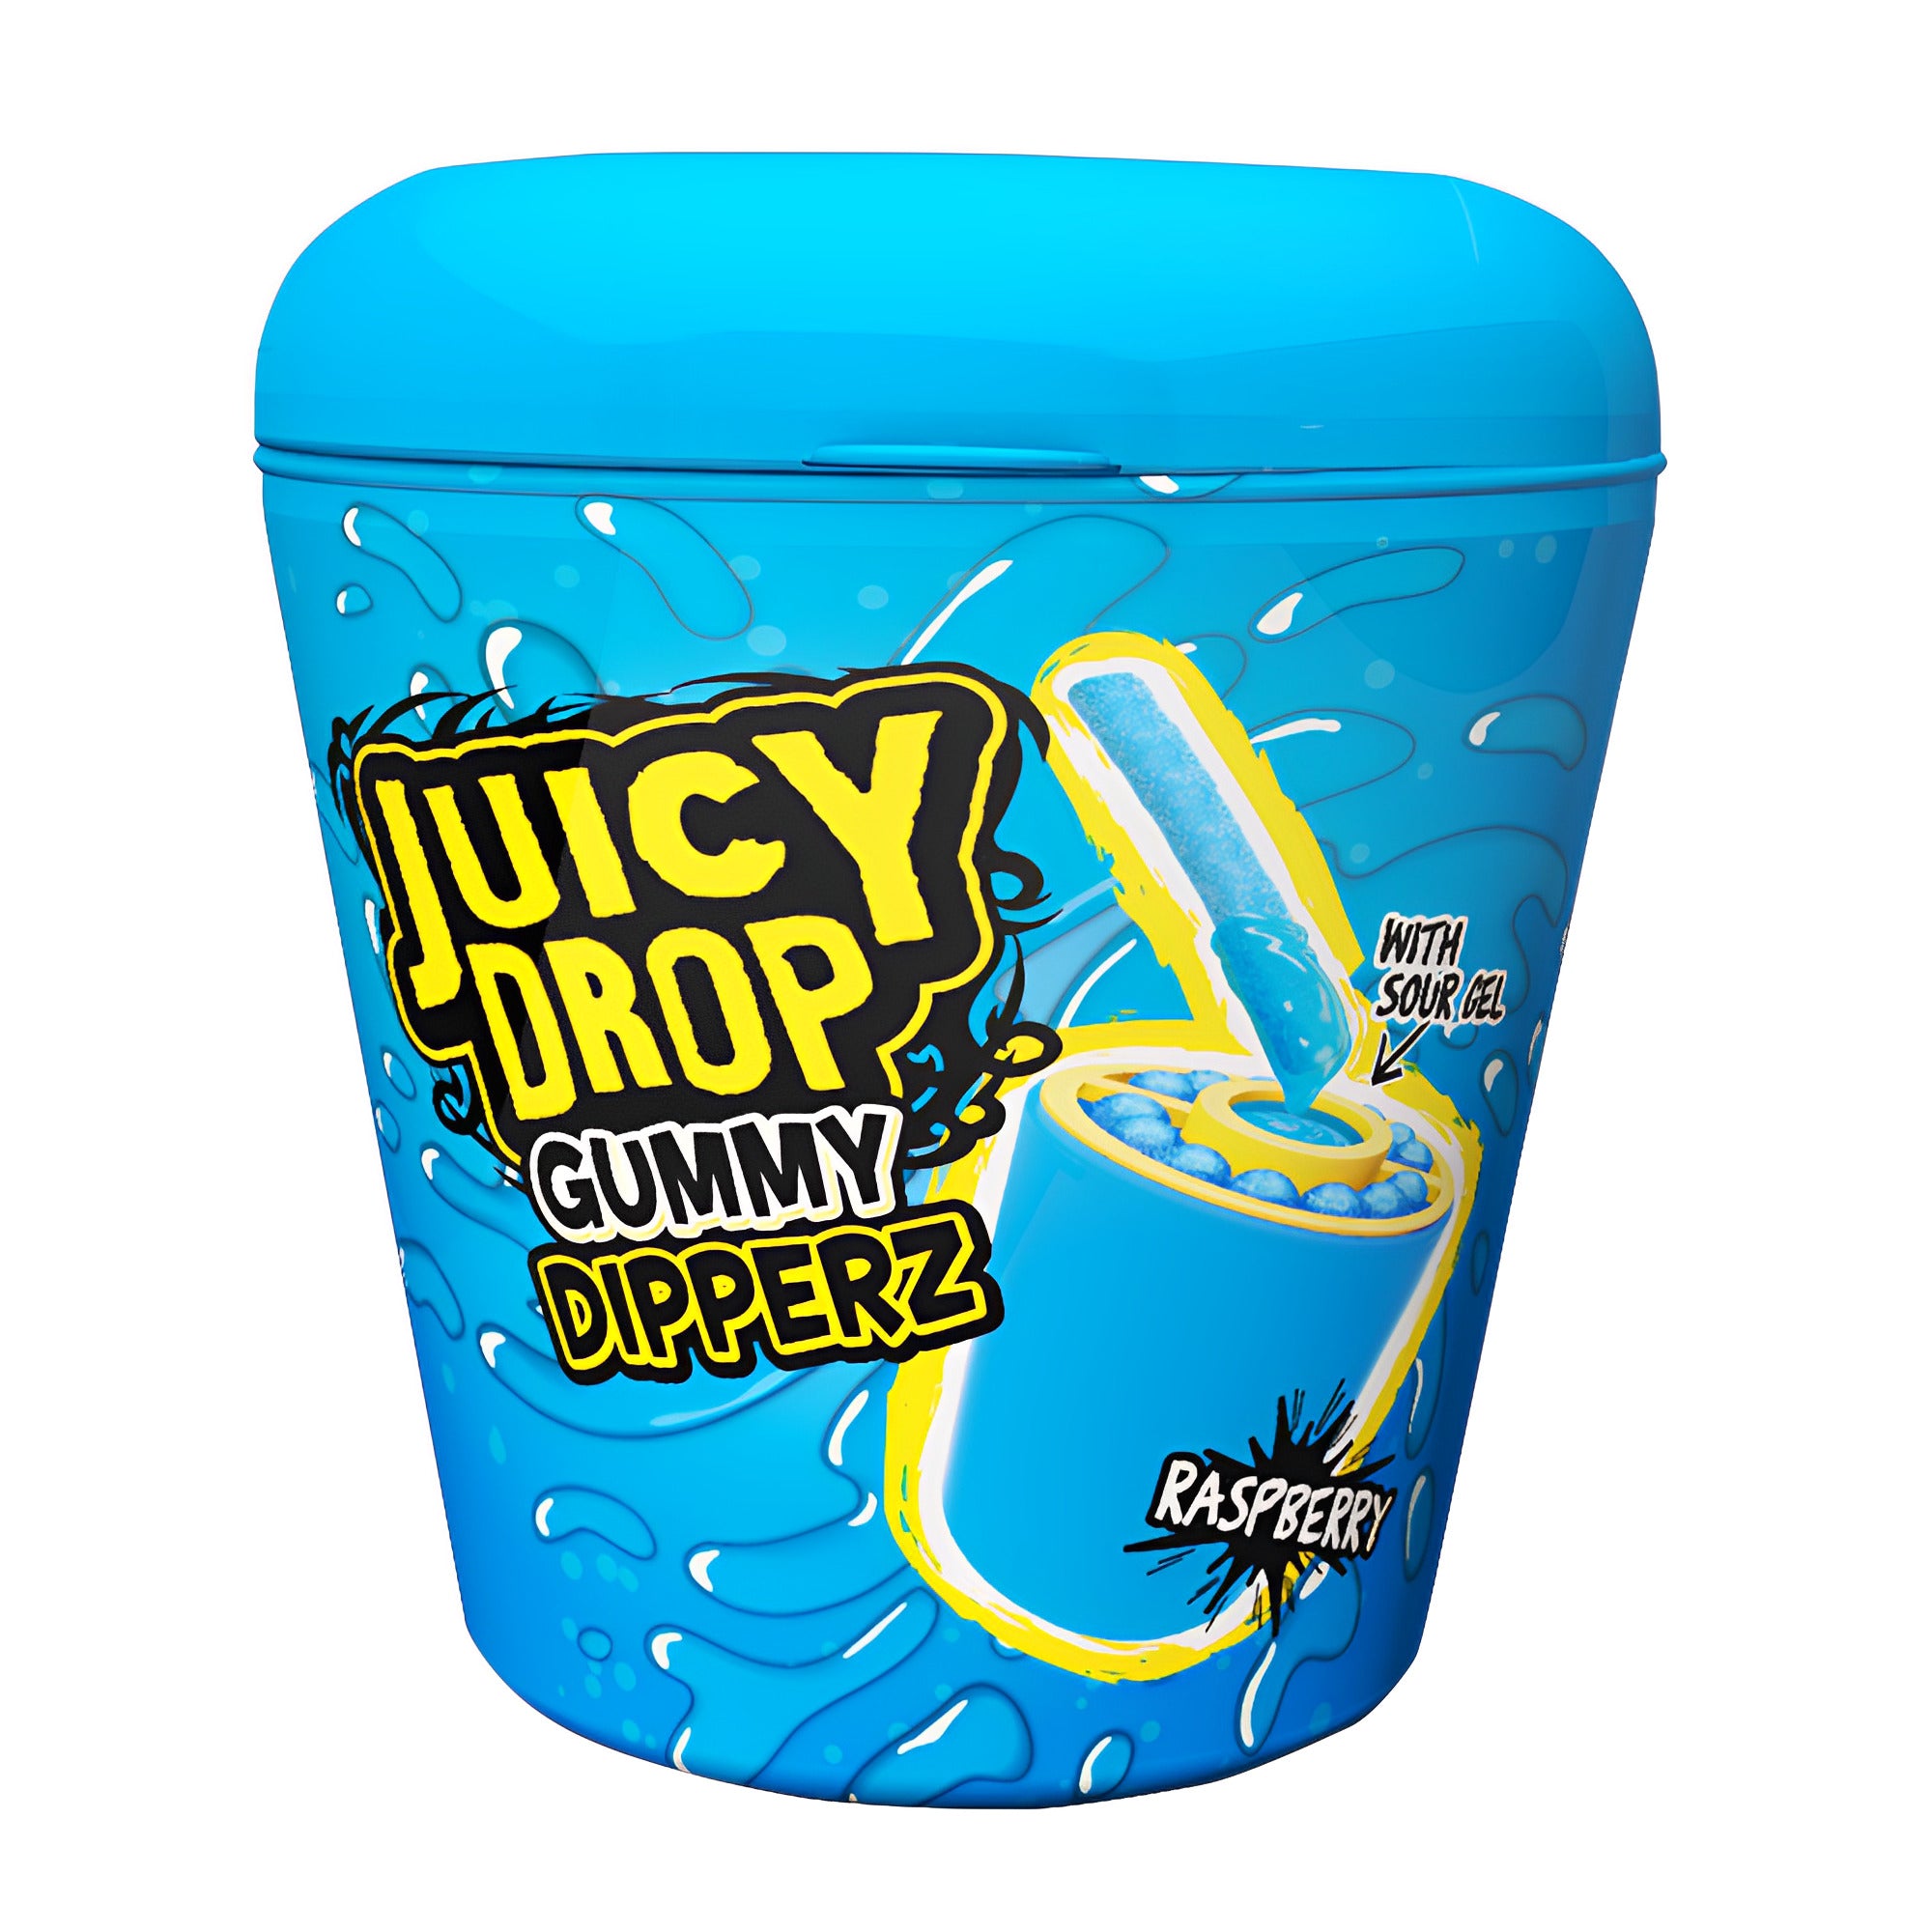 Juicy drop Gummy dip ‘n stix raspberry